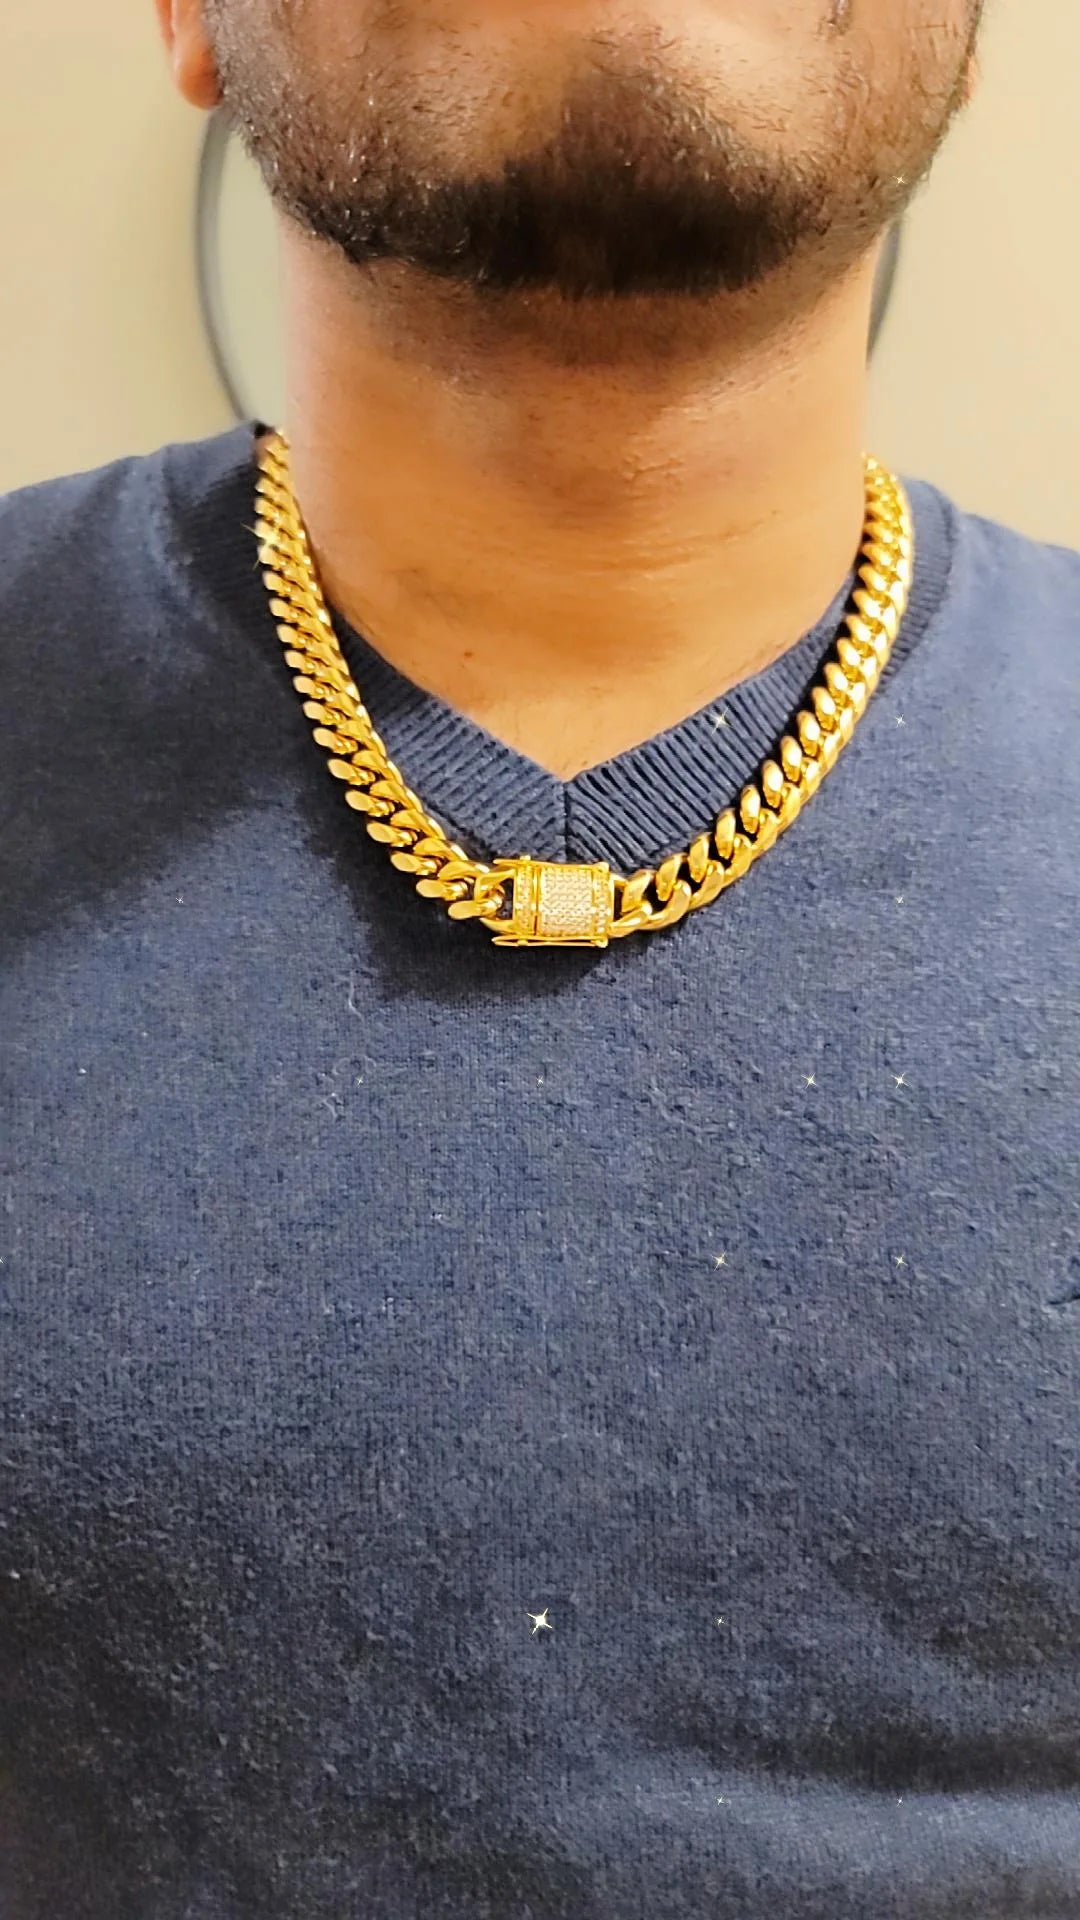 Unisex necklace with bracelet